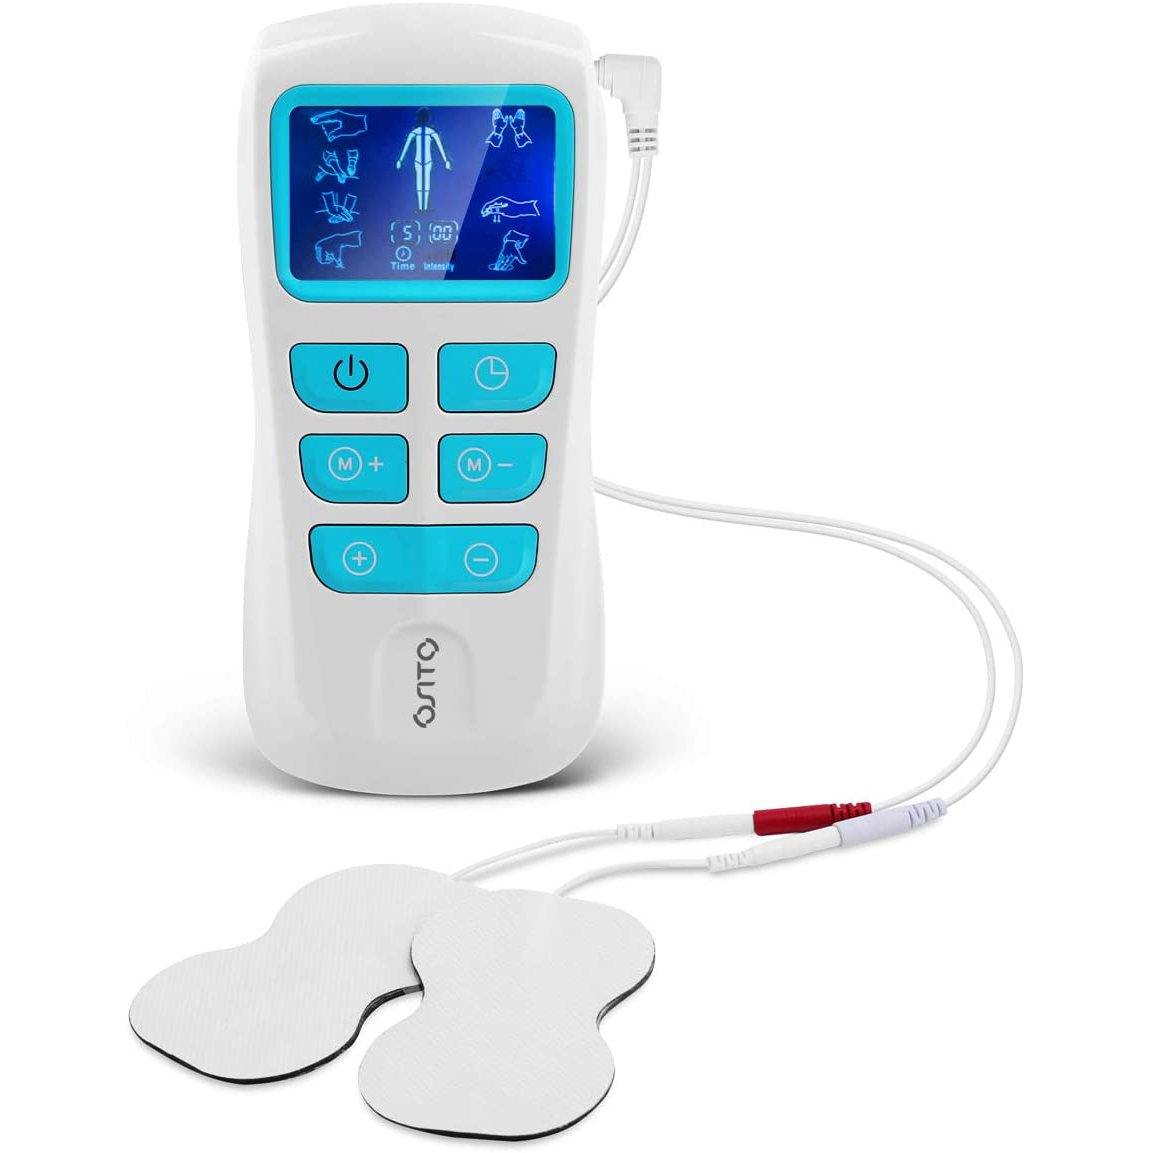 OSITO Wireless TENS Unit Muscle Stimulator EMS Massage Machine with Remote  (FSA HSA Eligible) Rechar…See more OSITO Wireless TENS Unit Muscle